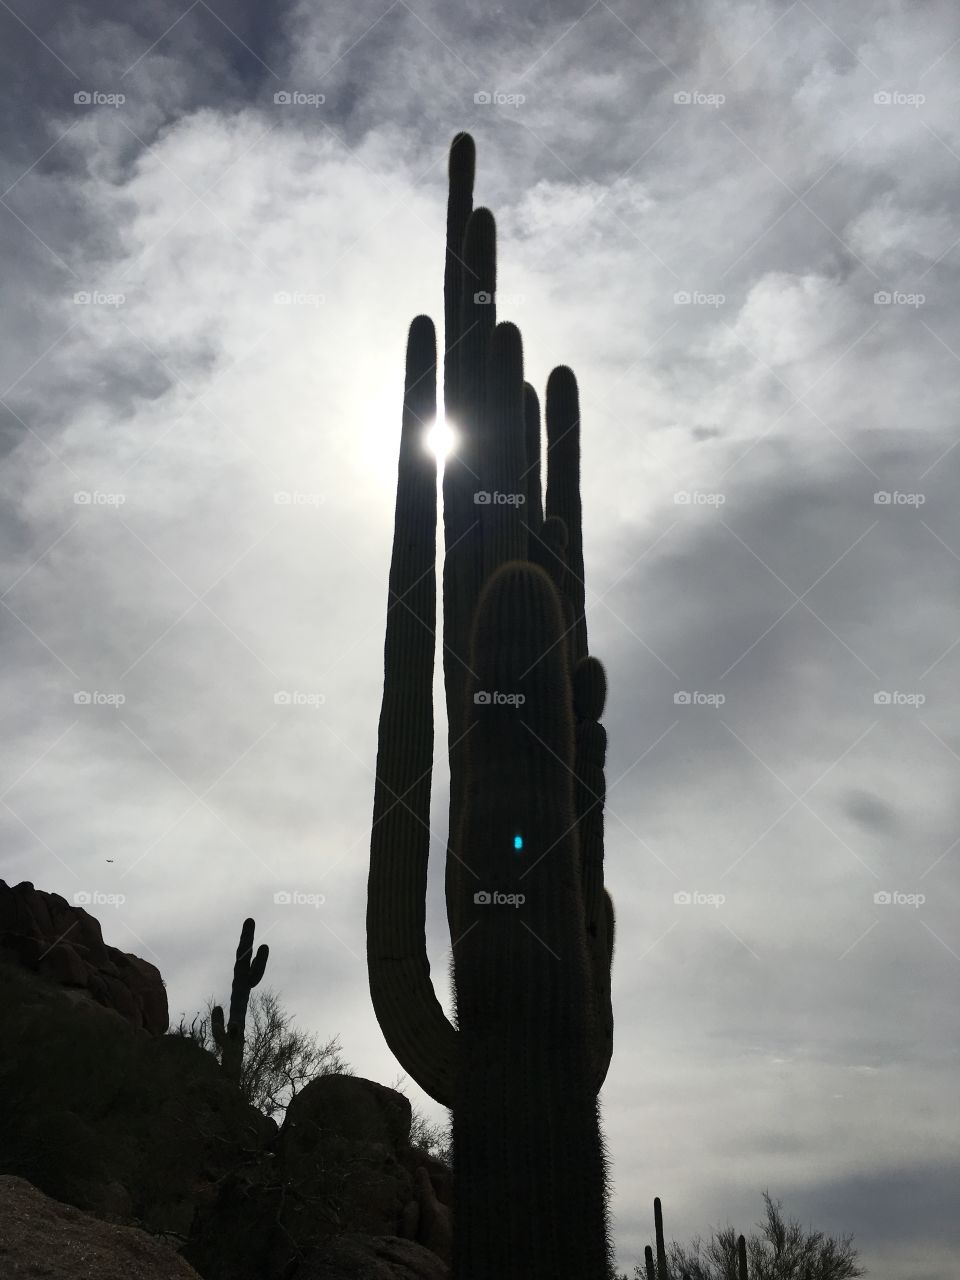 Gazing upwards as the sun peeks through a tall, ancient saguaro cactus in the desert